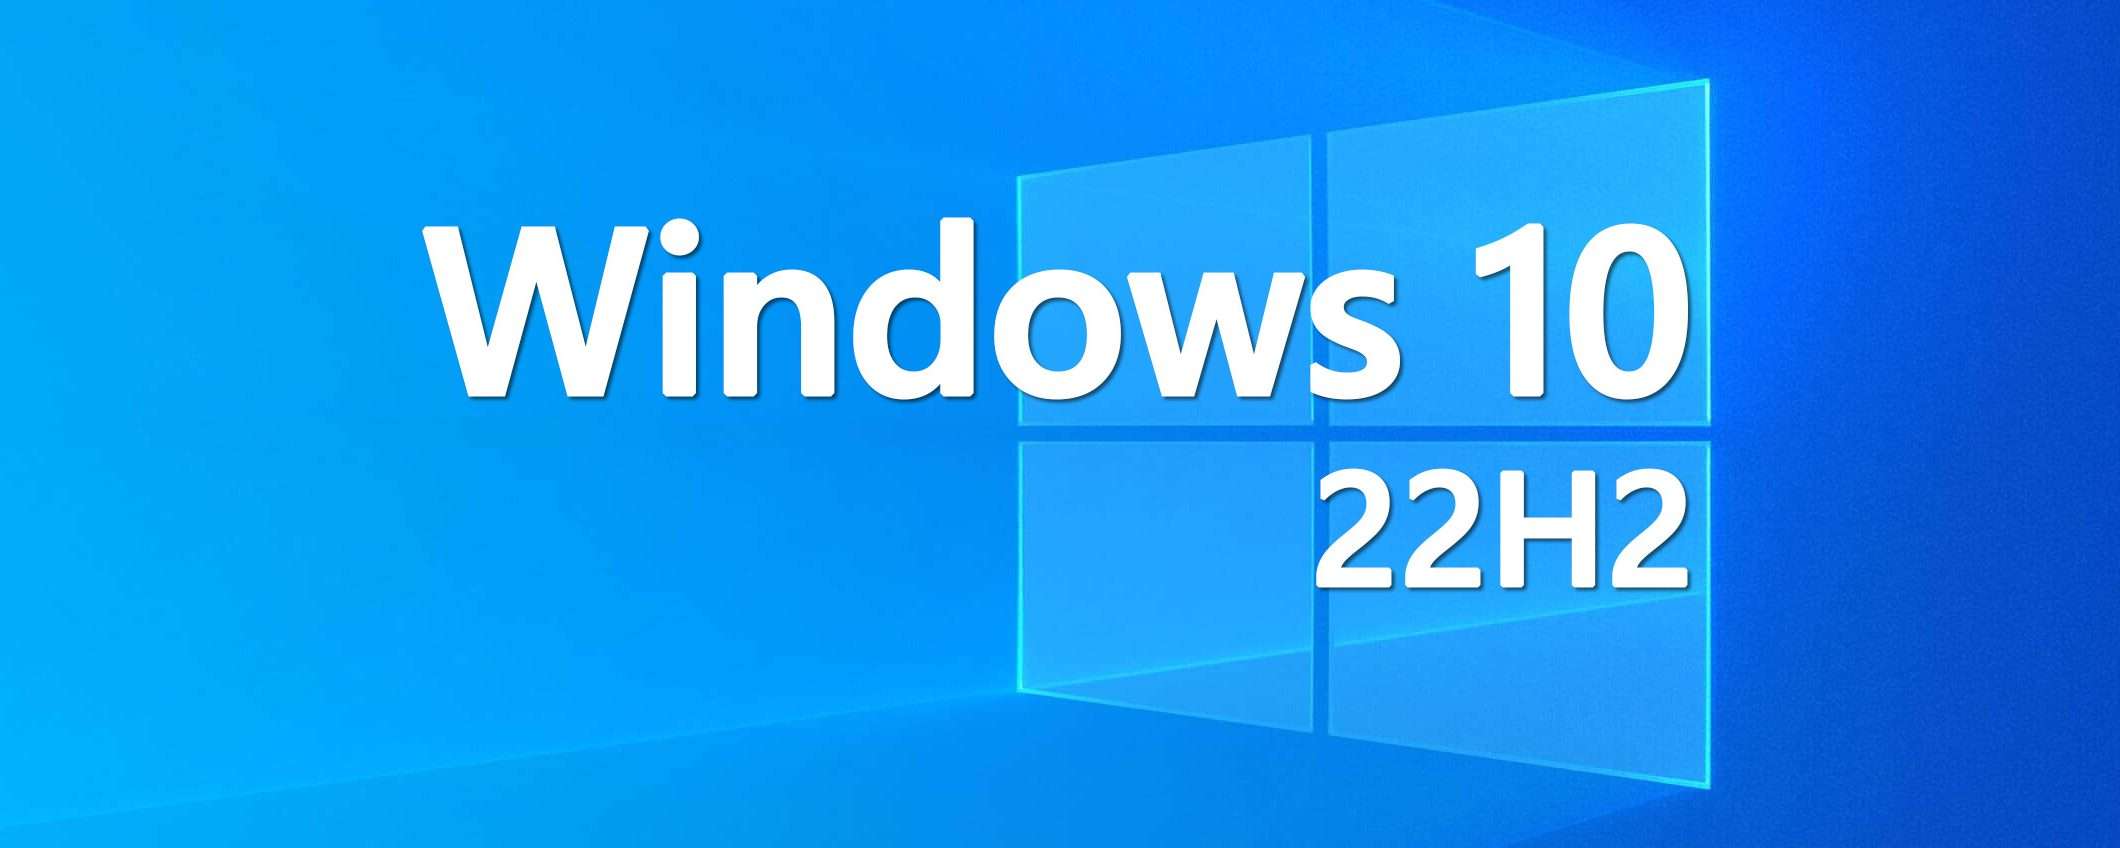 Windows 10 22H2: al via la distribuzione su larga scala